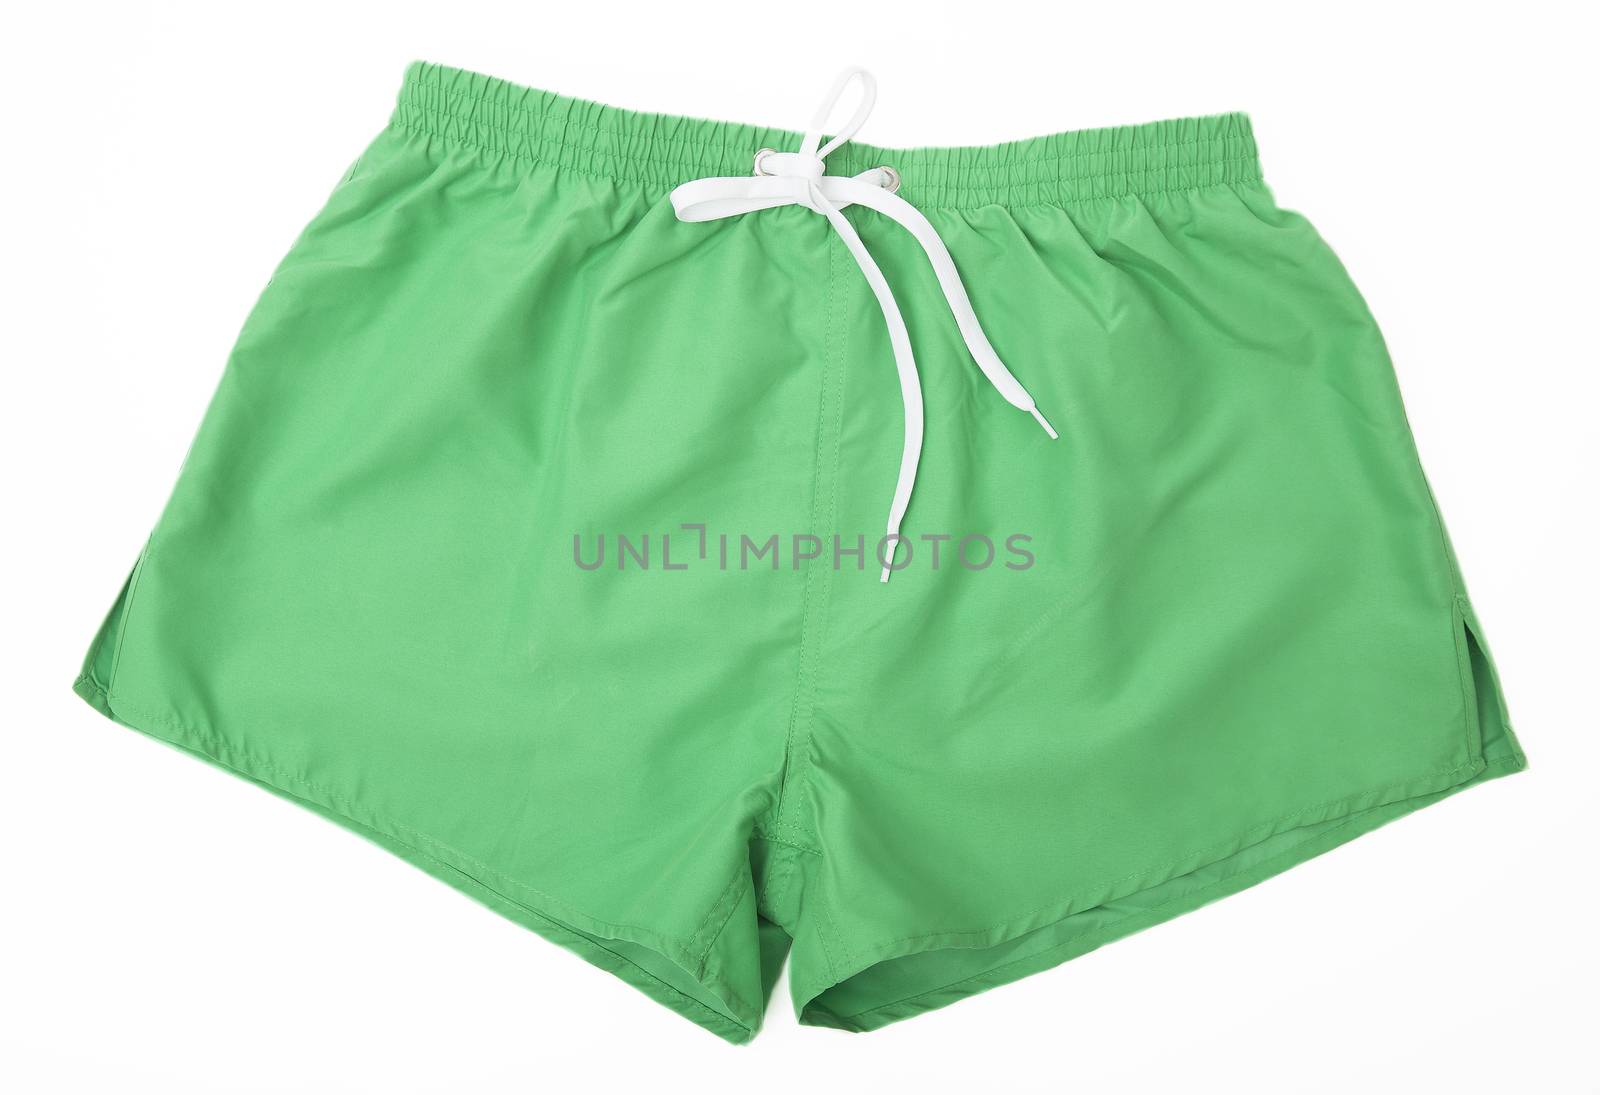 Green sport shorts by gemenacom